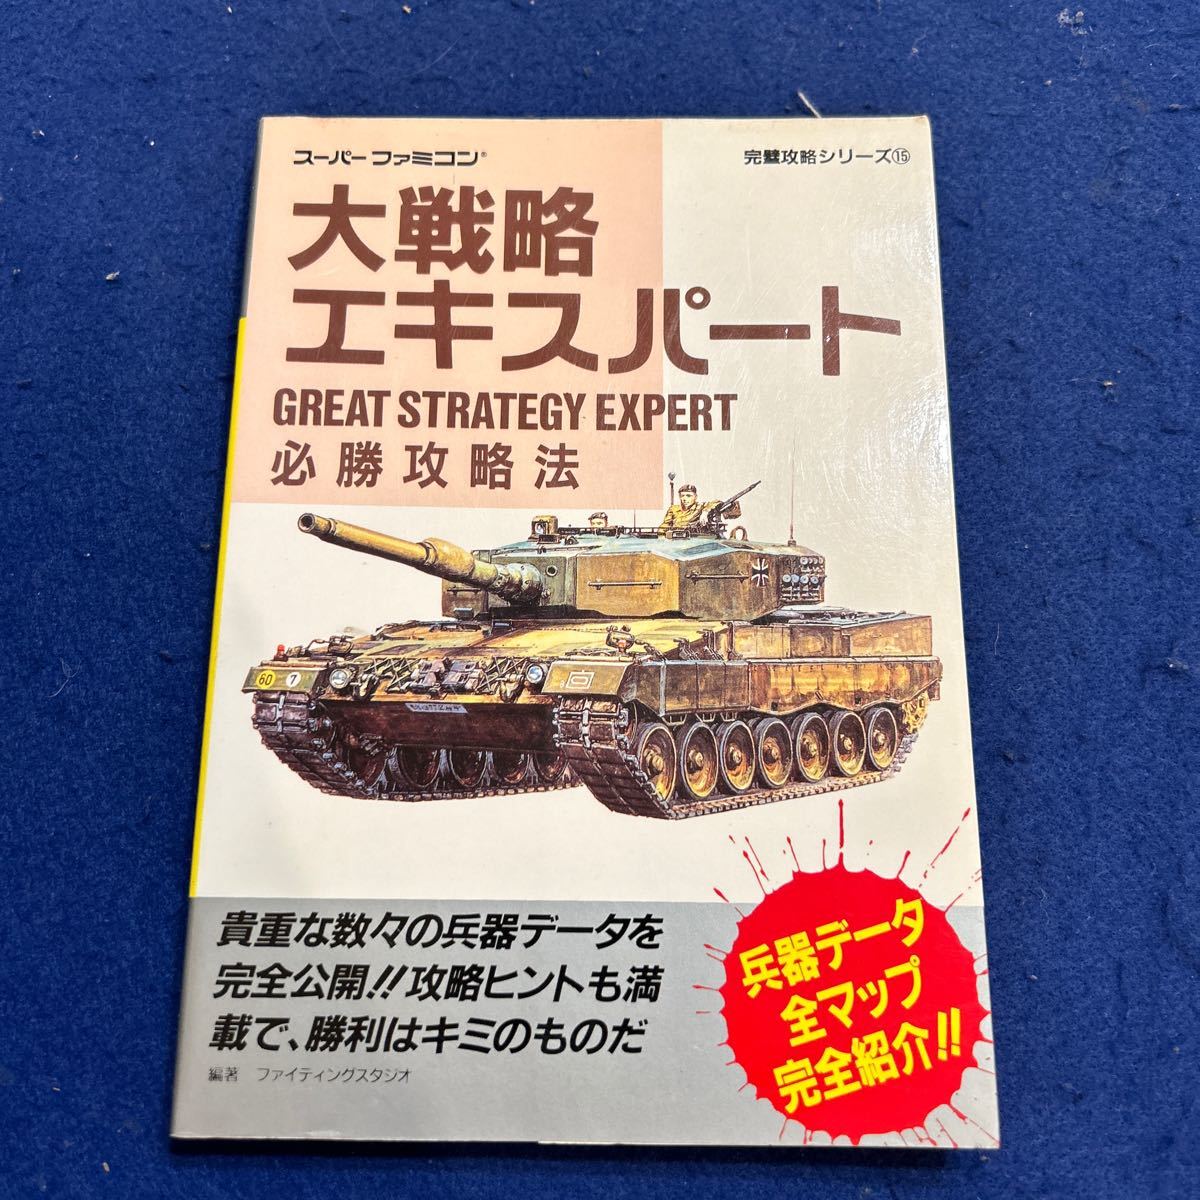  large strategy Expert certainly . capture method *. leaf company * Super Famicom *. vessel data 